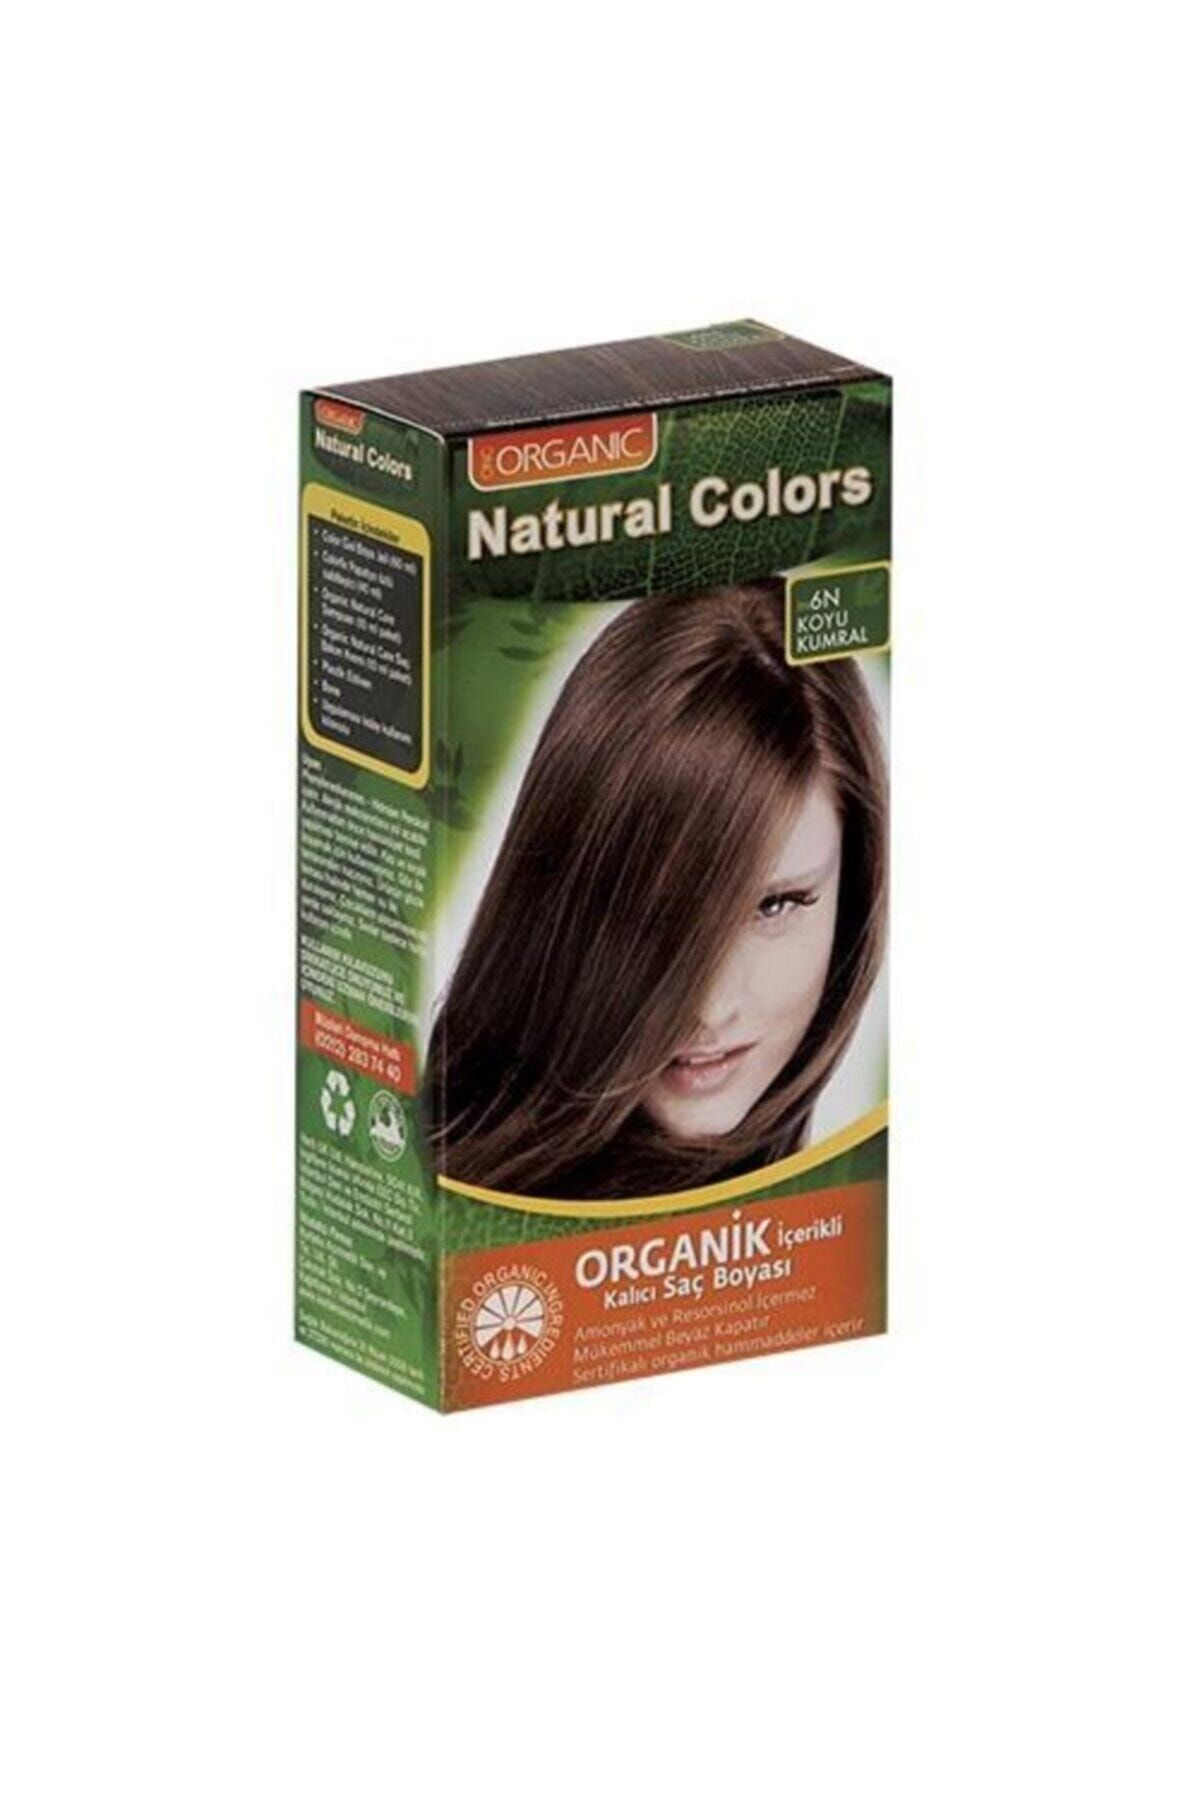 Organic Natural Colors Saç Boyası 6n Koyu Kumral